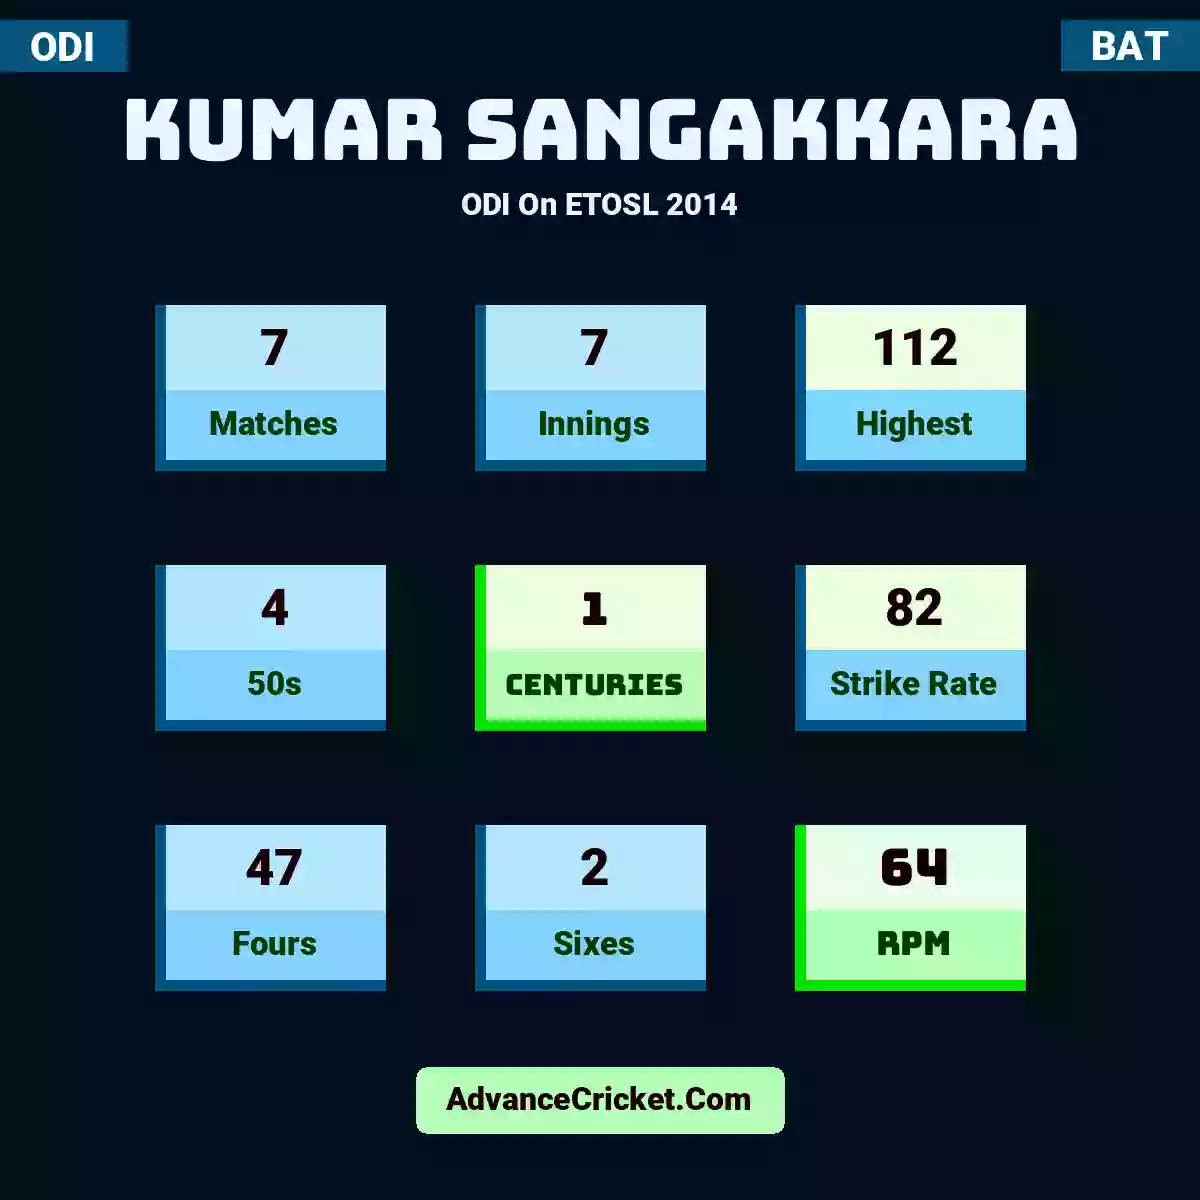 Kumar Sangakkara ODI  On ETOSL 2014, Kumar Sangakkara played 7 matches, scored 112 runs as highest, 4 half-centuries, and 1 centuries, with a strike rate of 82. K.Sangakkara hit 47 fours and 2 sixes, with an RPM of 64.